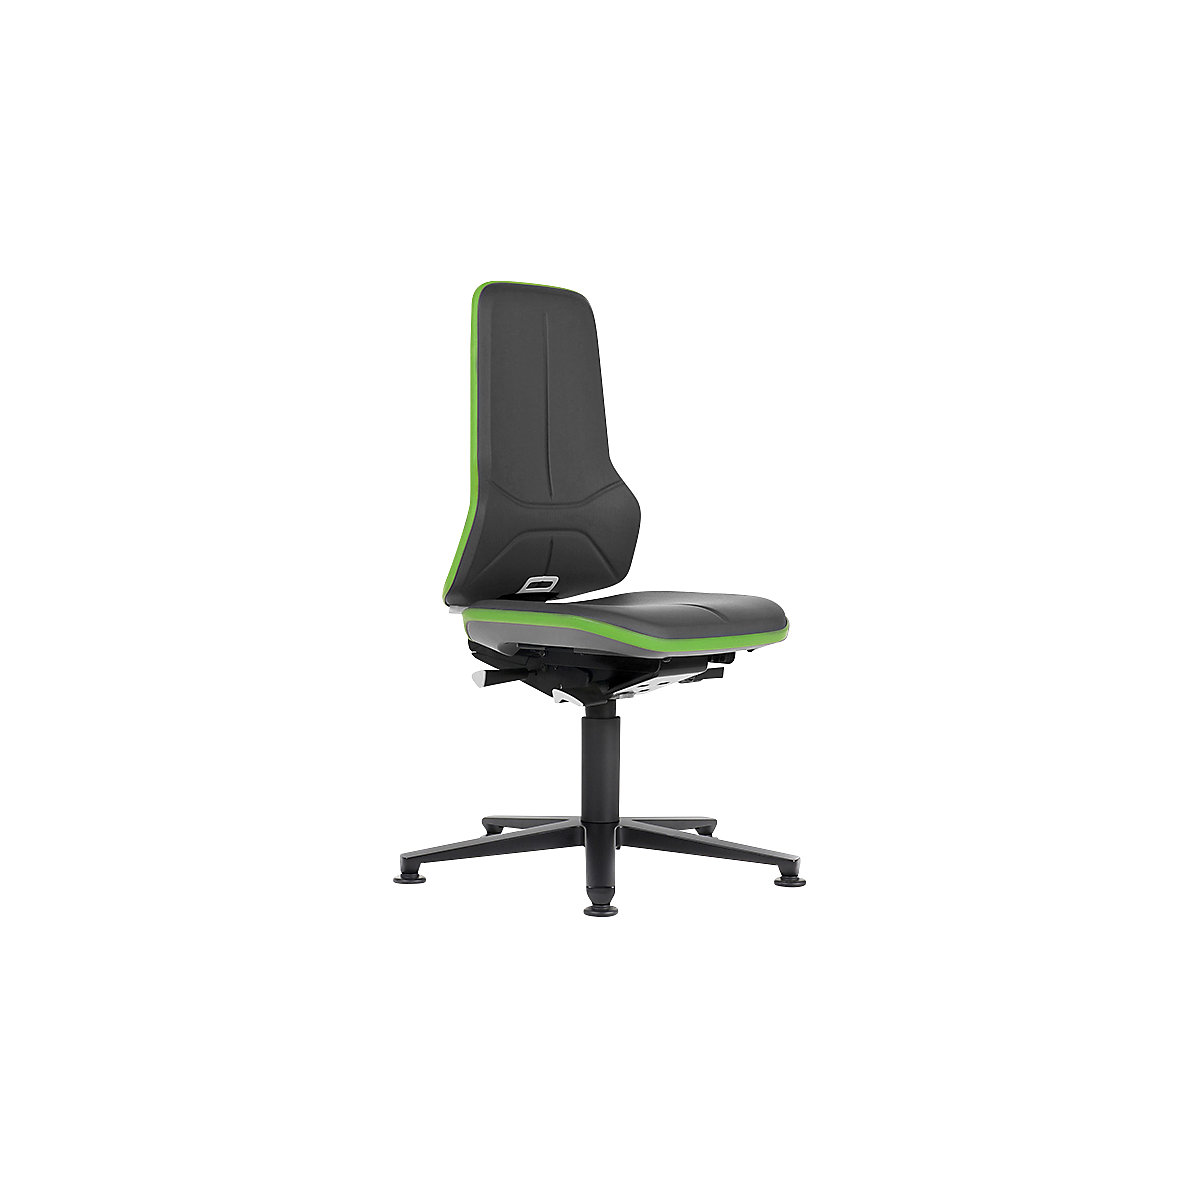 NEON industrial swivel chair swivel chair, floor glides - bimos